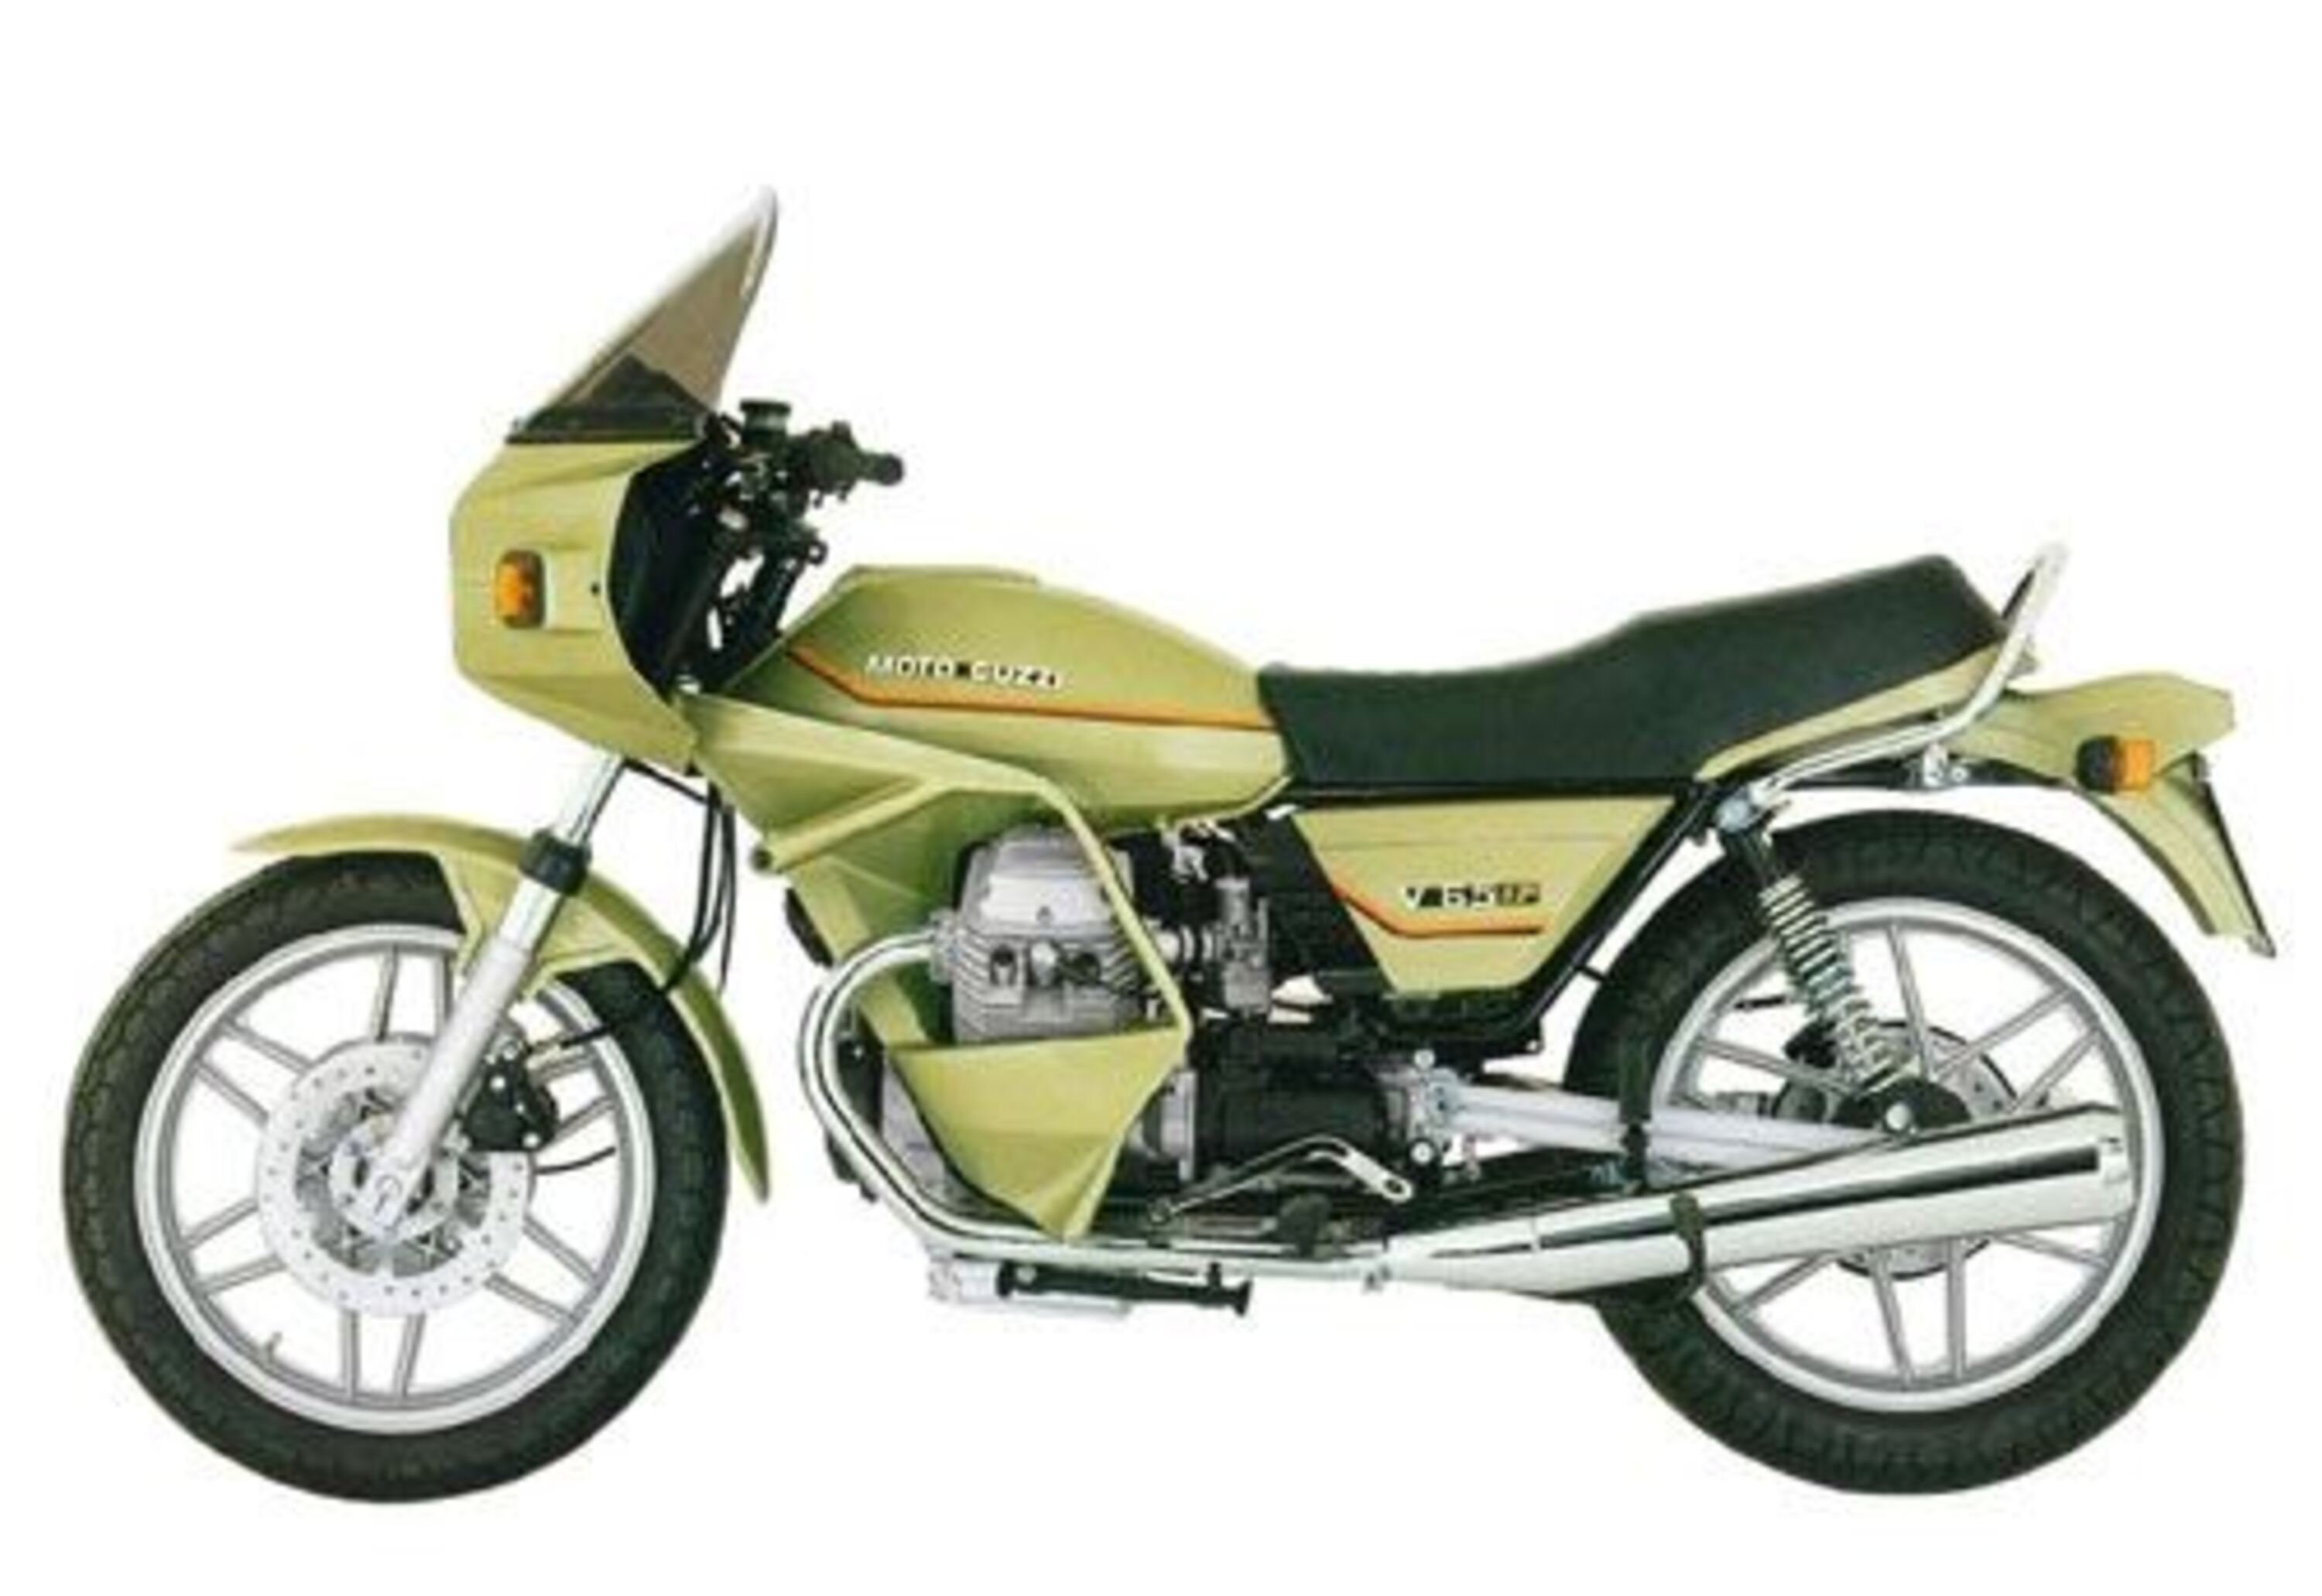 Moto Guzzi V 65 V 65 SP (1982 - 86)